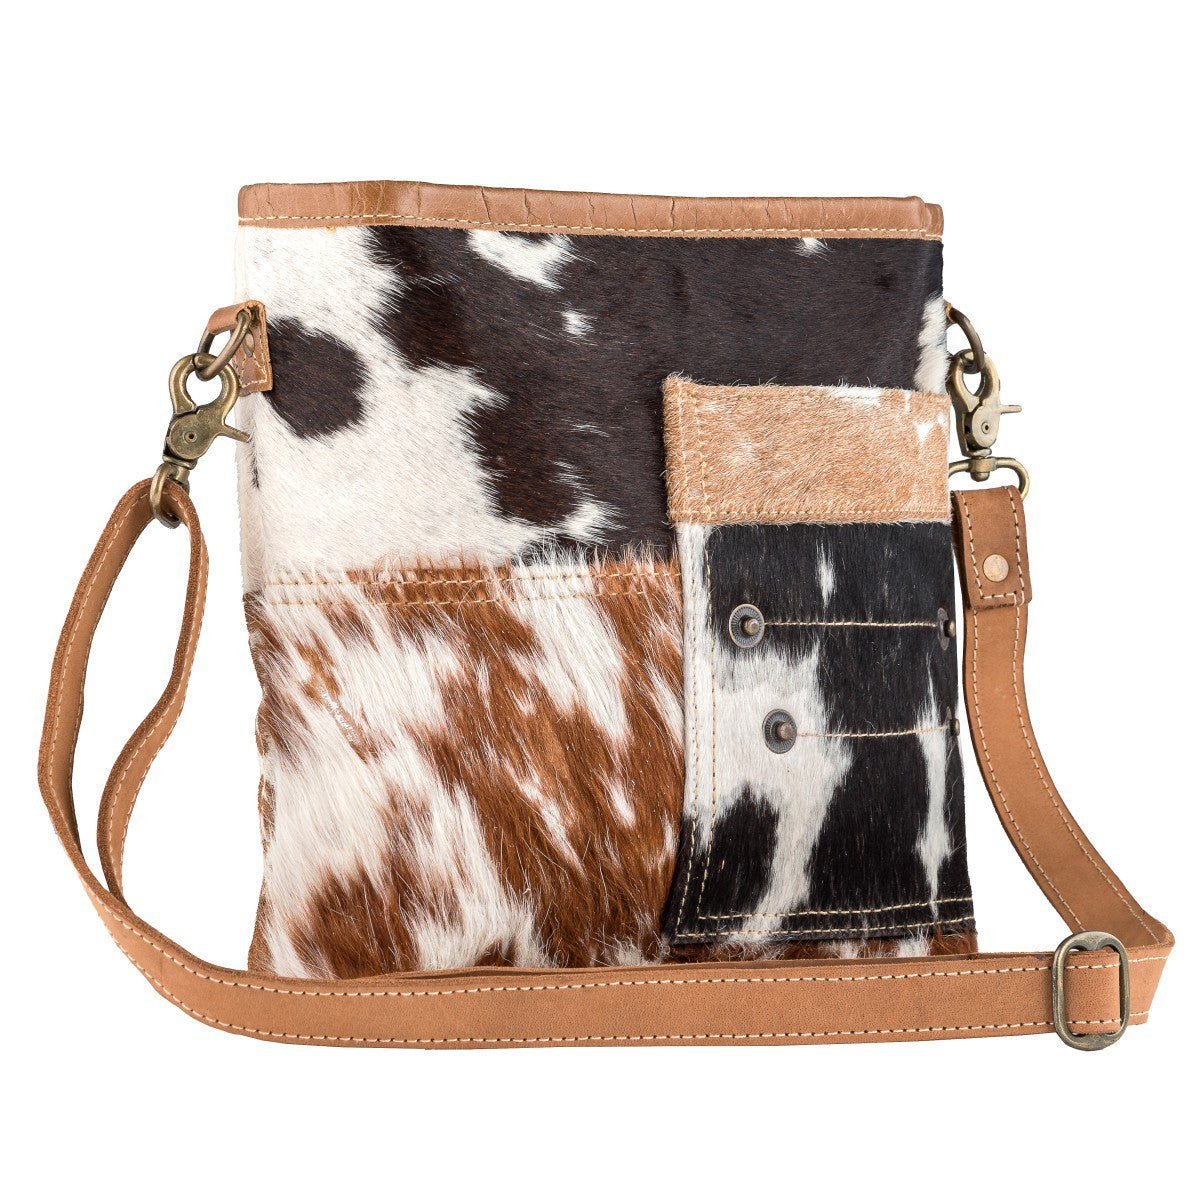 Hand-sewn leather cowhide shoulder bag 2way diagonal bag - Shop